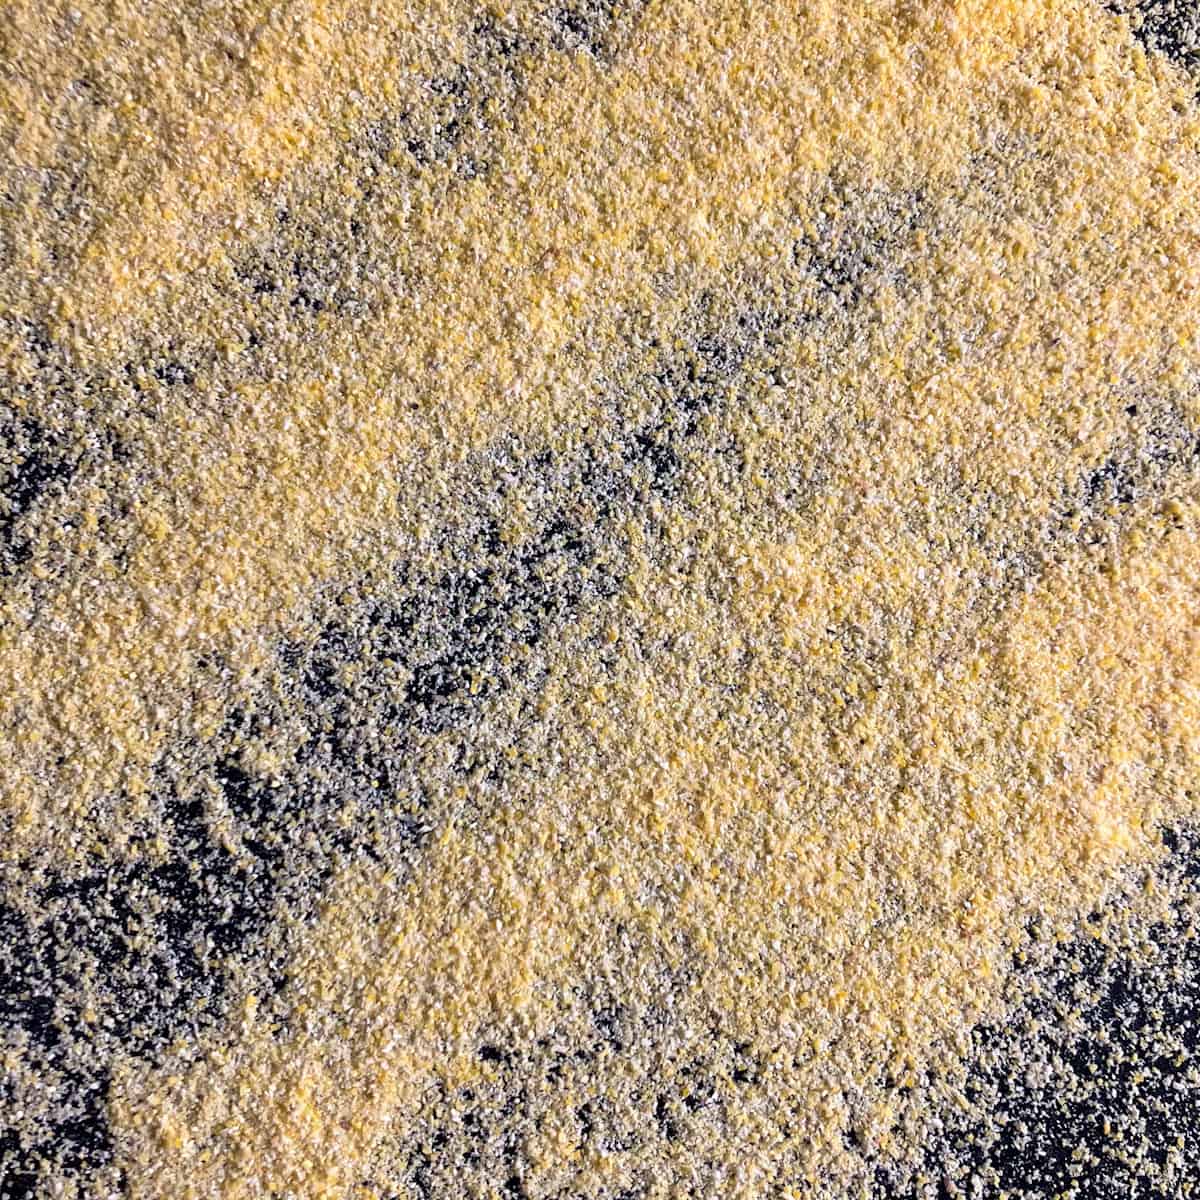 alternatives corn flour